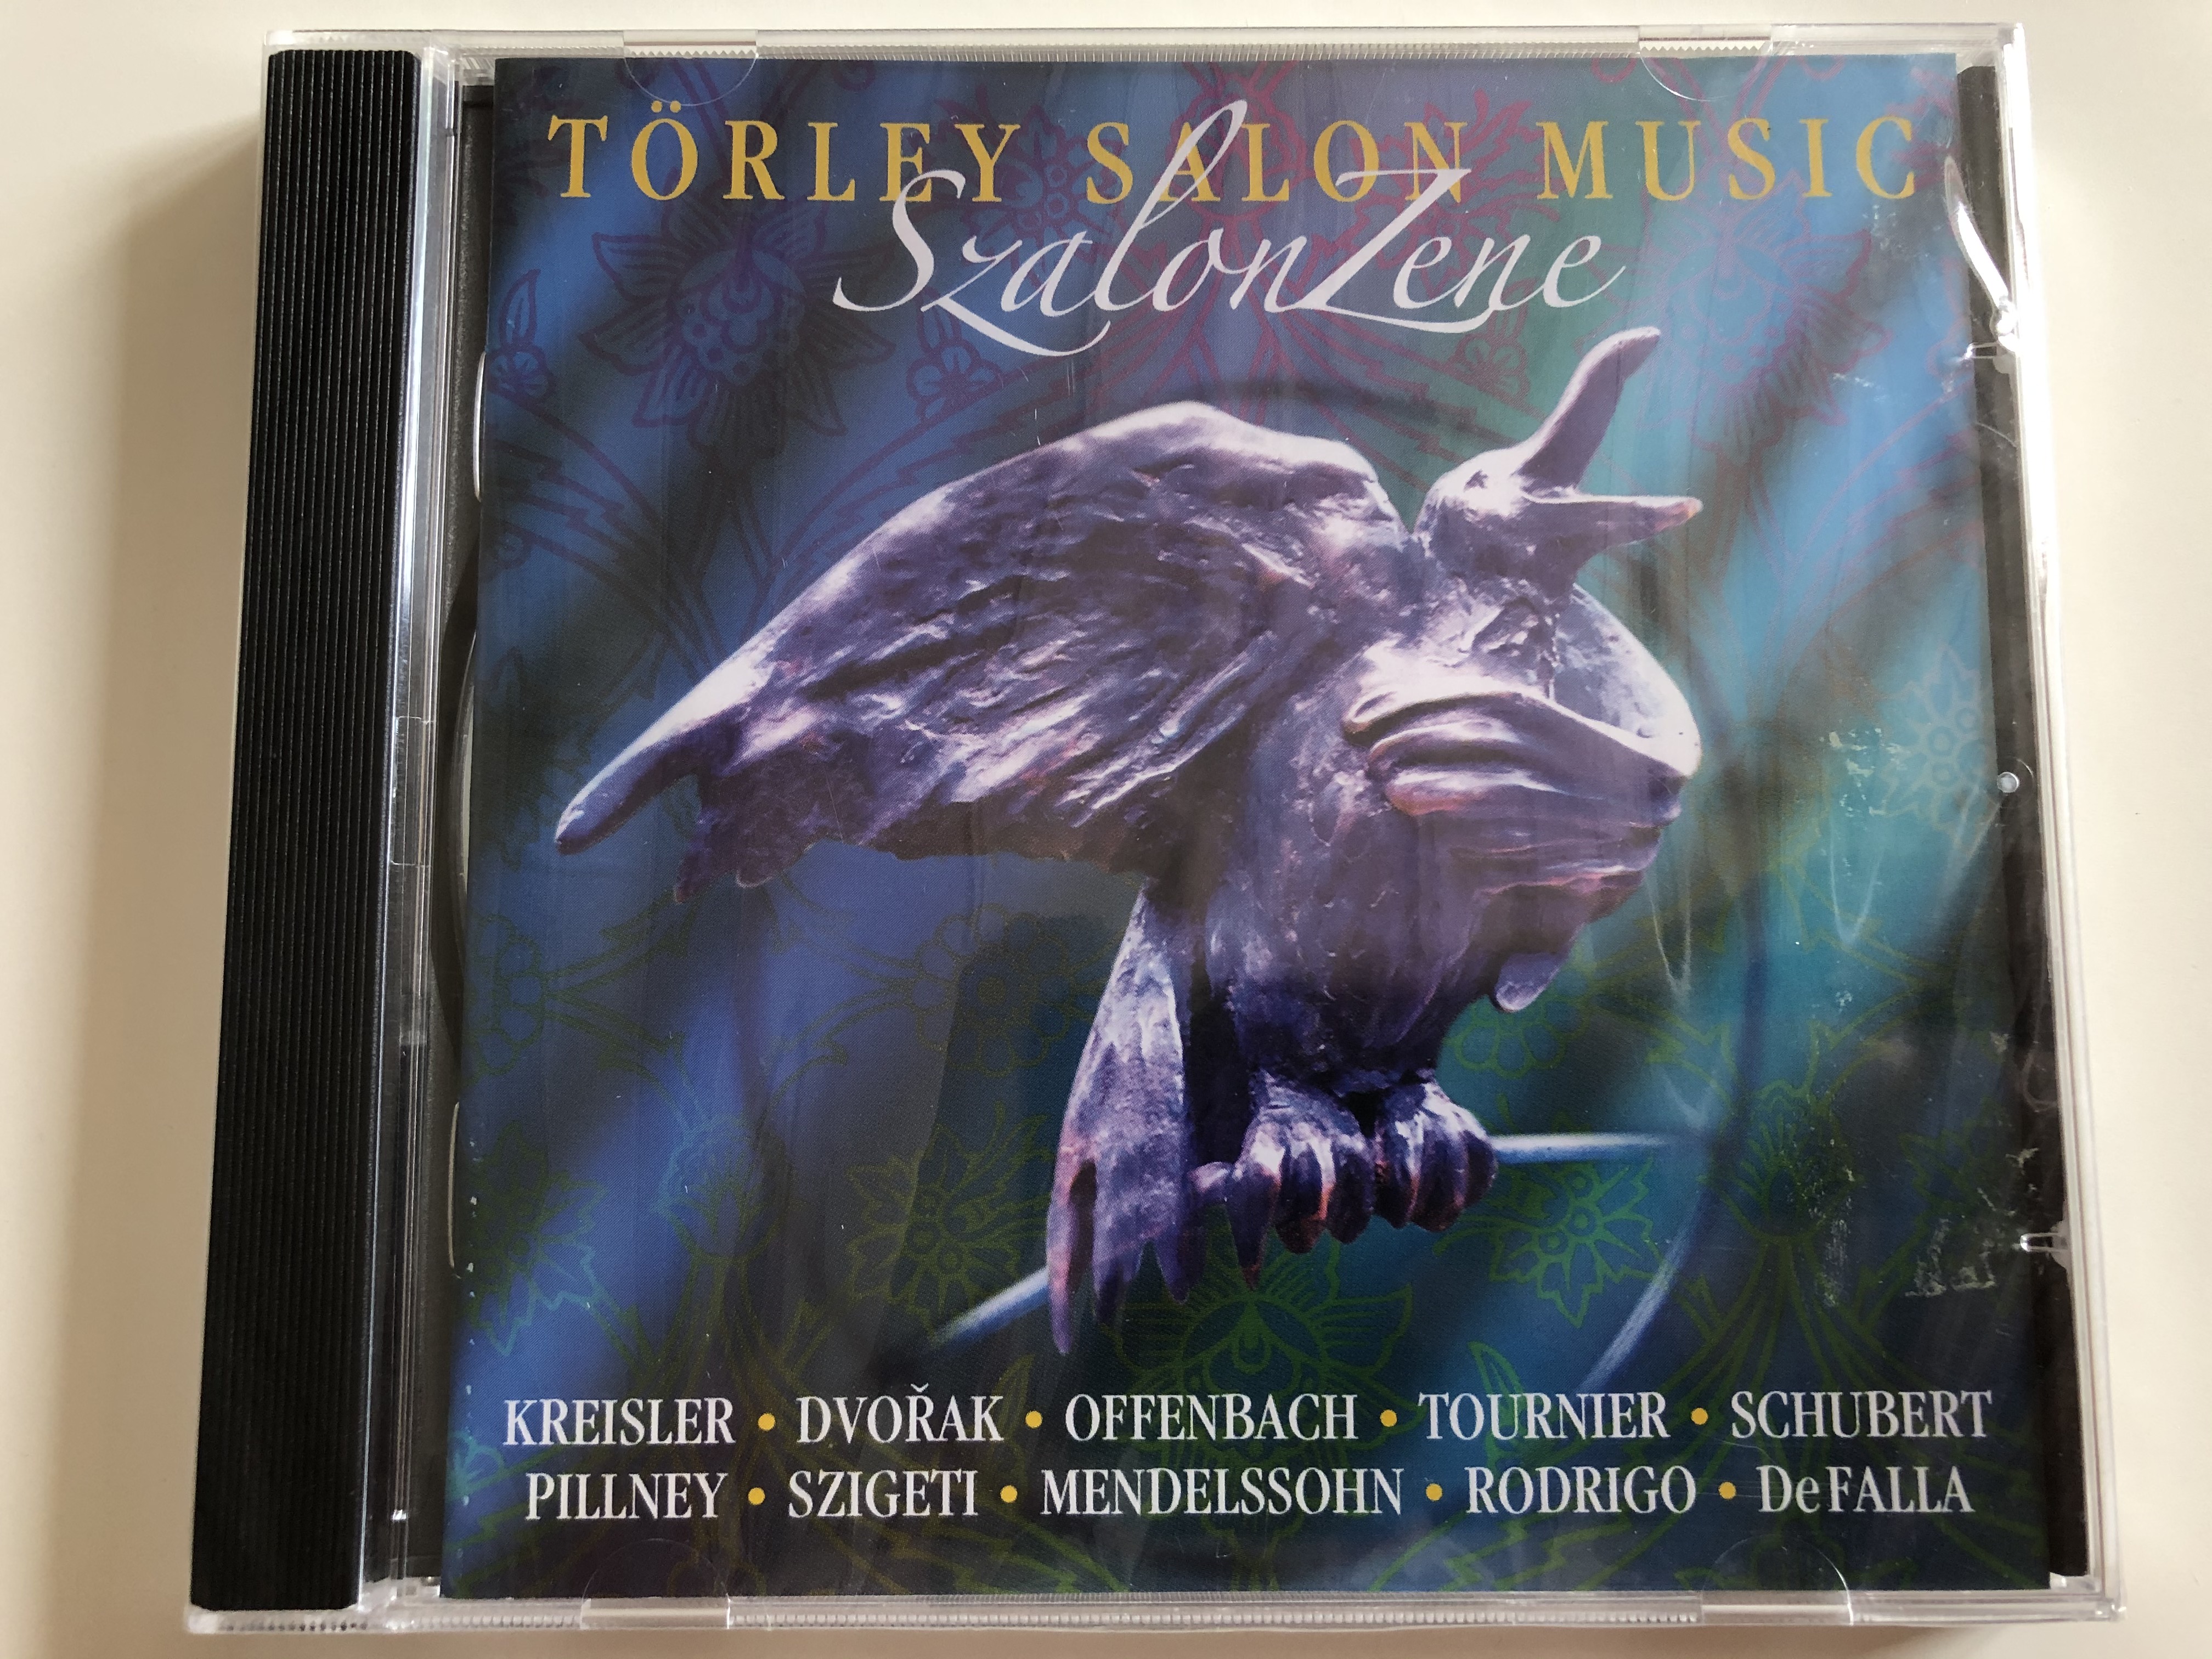 torley-salon-music-szalon-zene-kreisler-dvorak-offenbach-tournier-schubert-pillney-szigeti-mendelssohn-rodrigo-defalla-katedralis-muveszeti-bt.-audio-cd-2008-stereo-kbt-007-1-.jpg